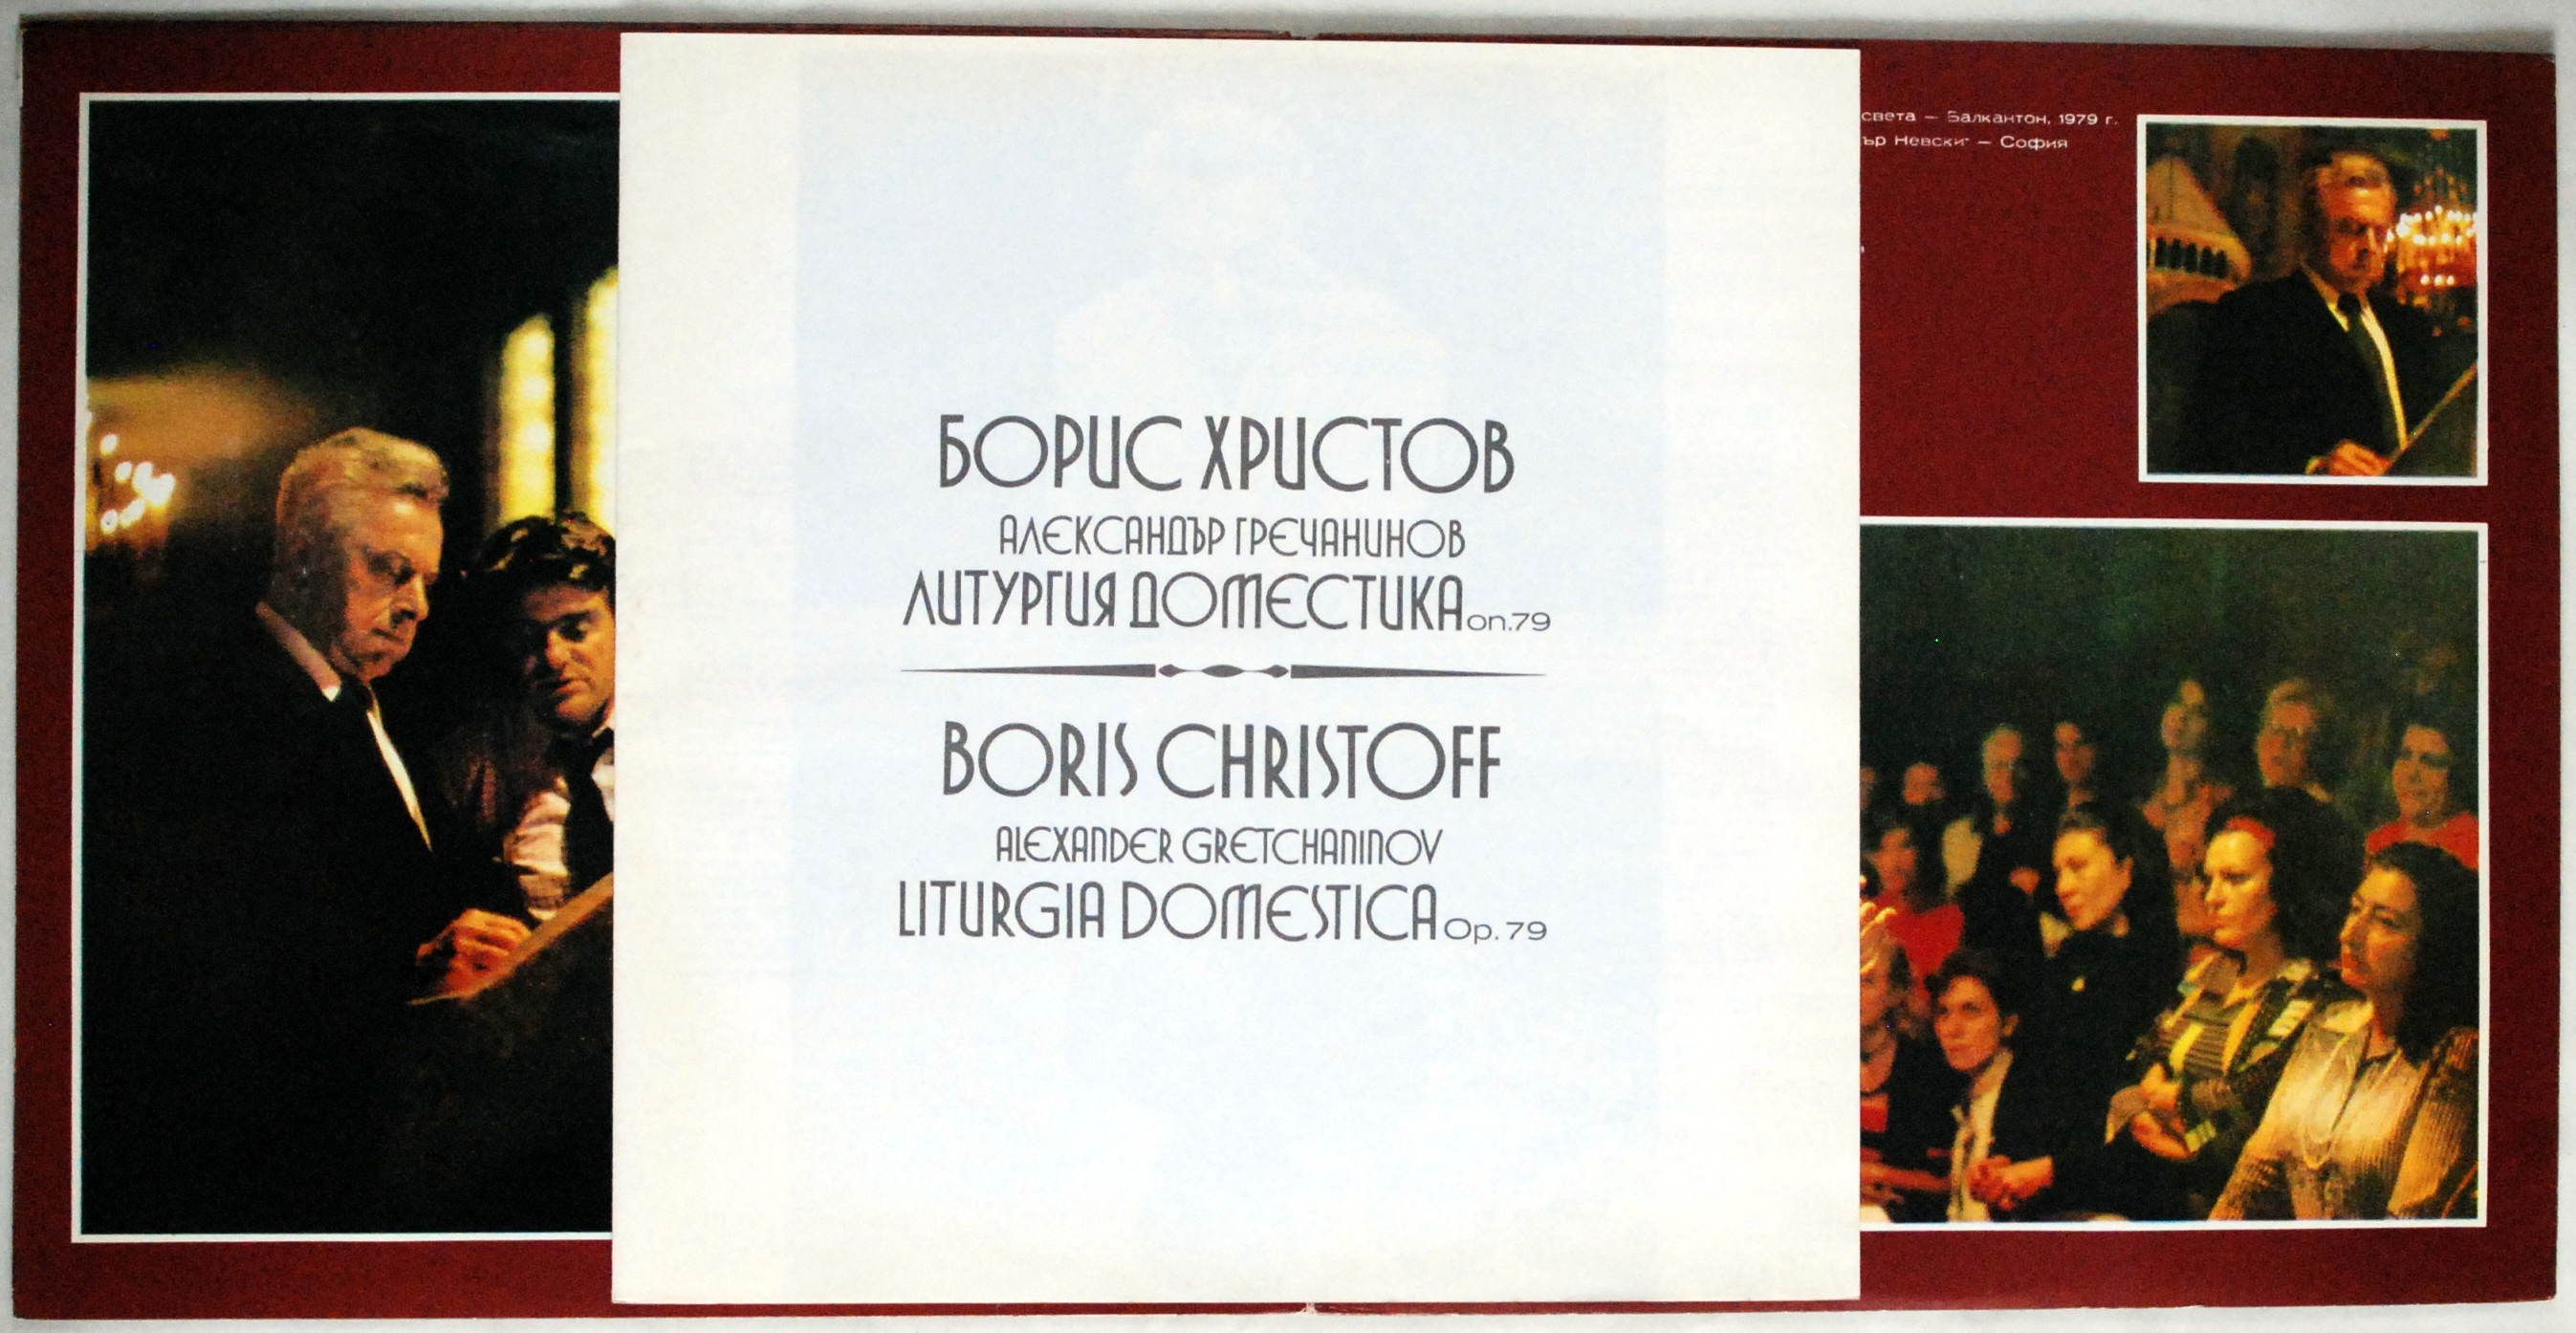 B. Christoff, A. Gretchaninov - Liturgia Domestica s.EX